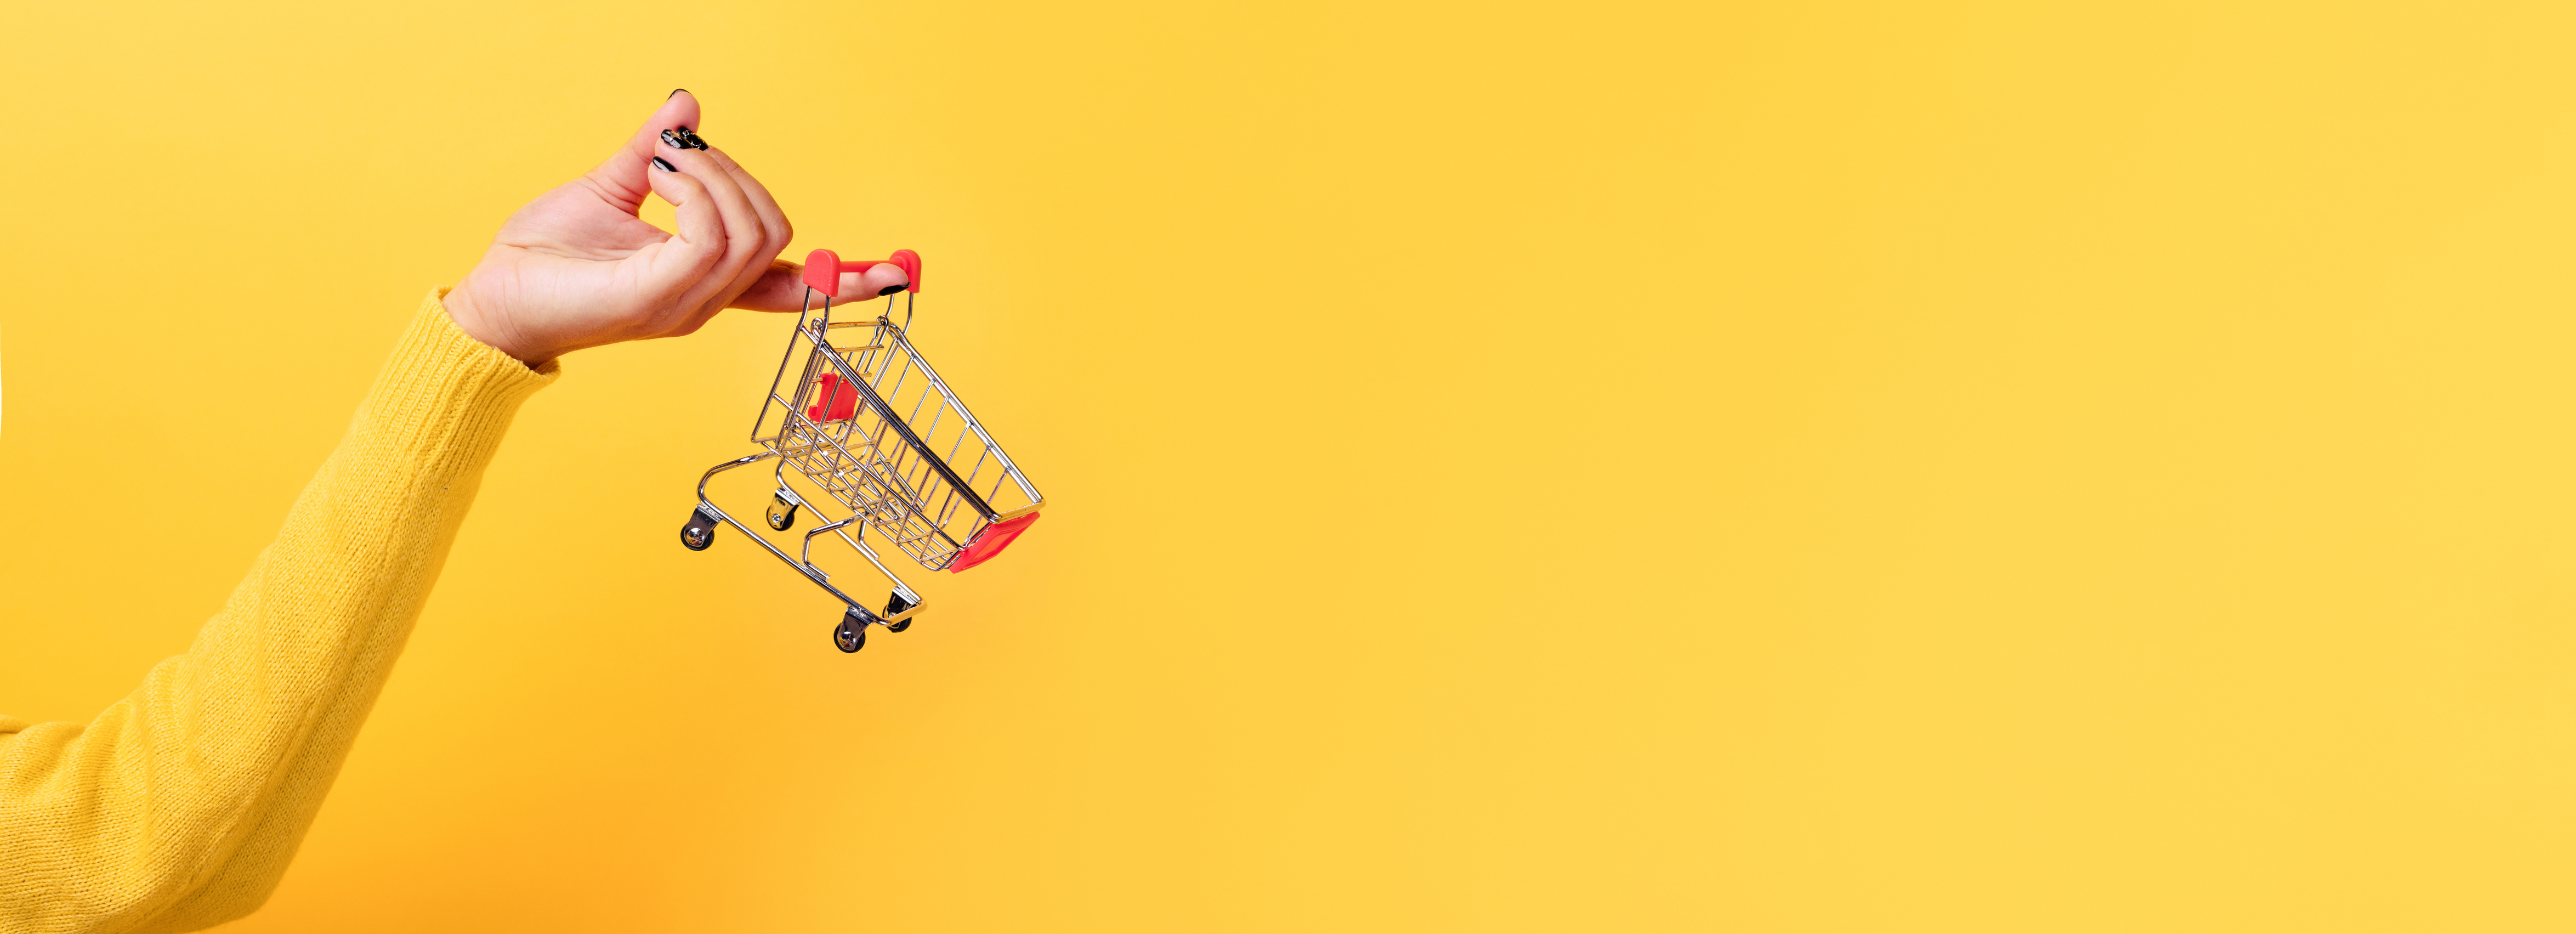 tiny shopping cart trolley